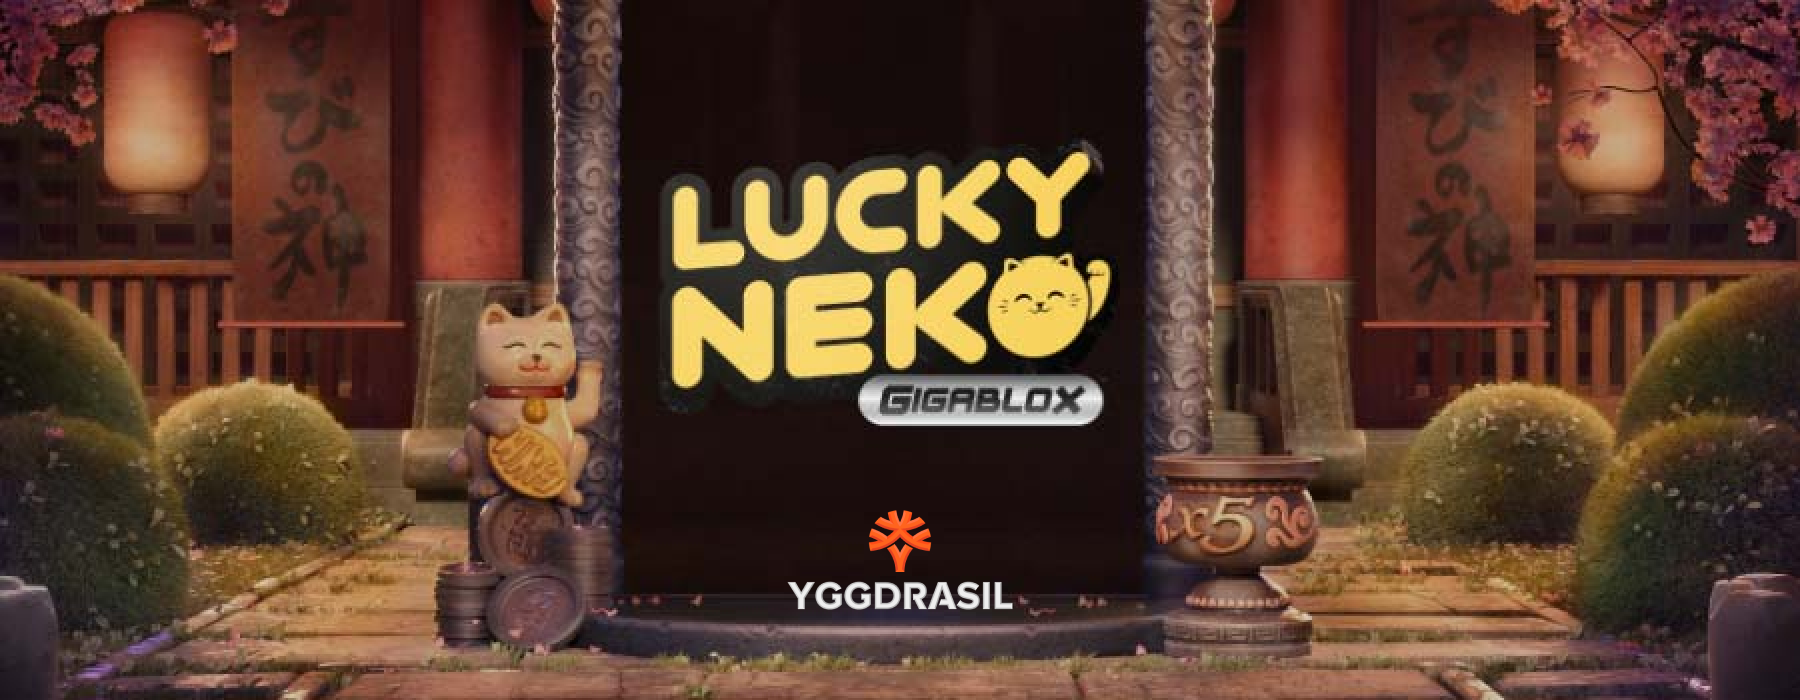 Lucky Neko Gigablox von Yggdrasil